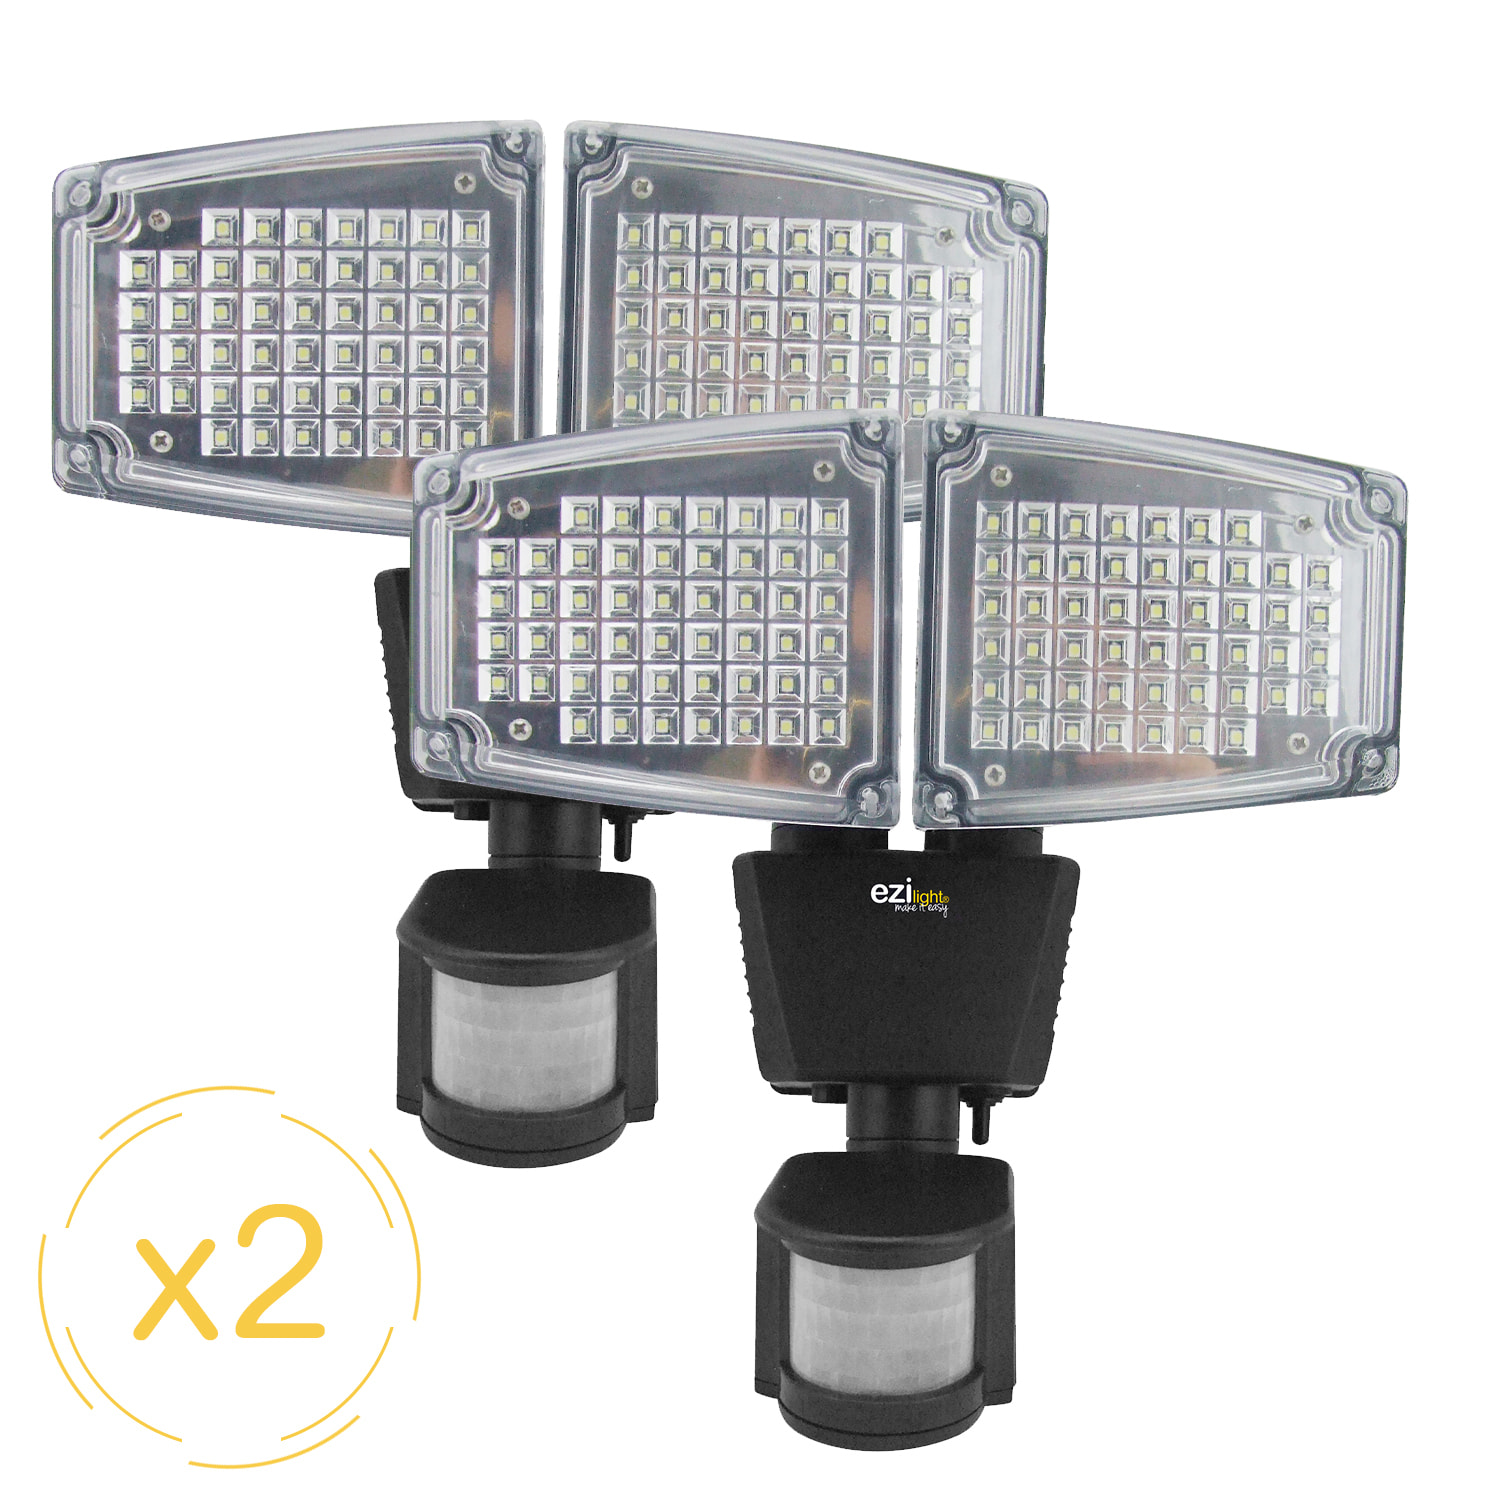 EZIlight® Solar pro 2 x2